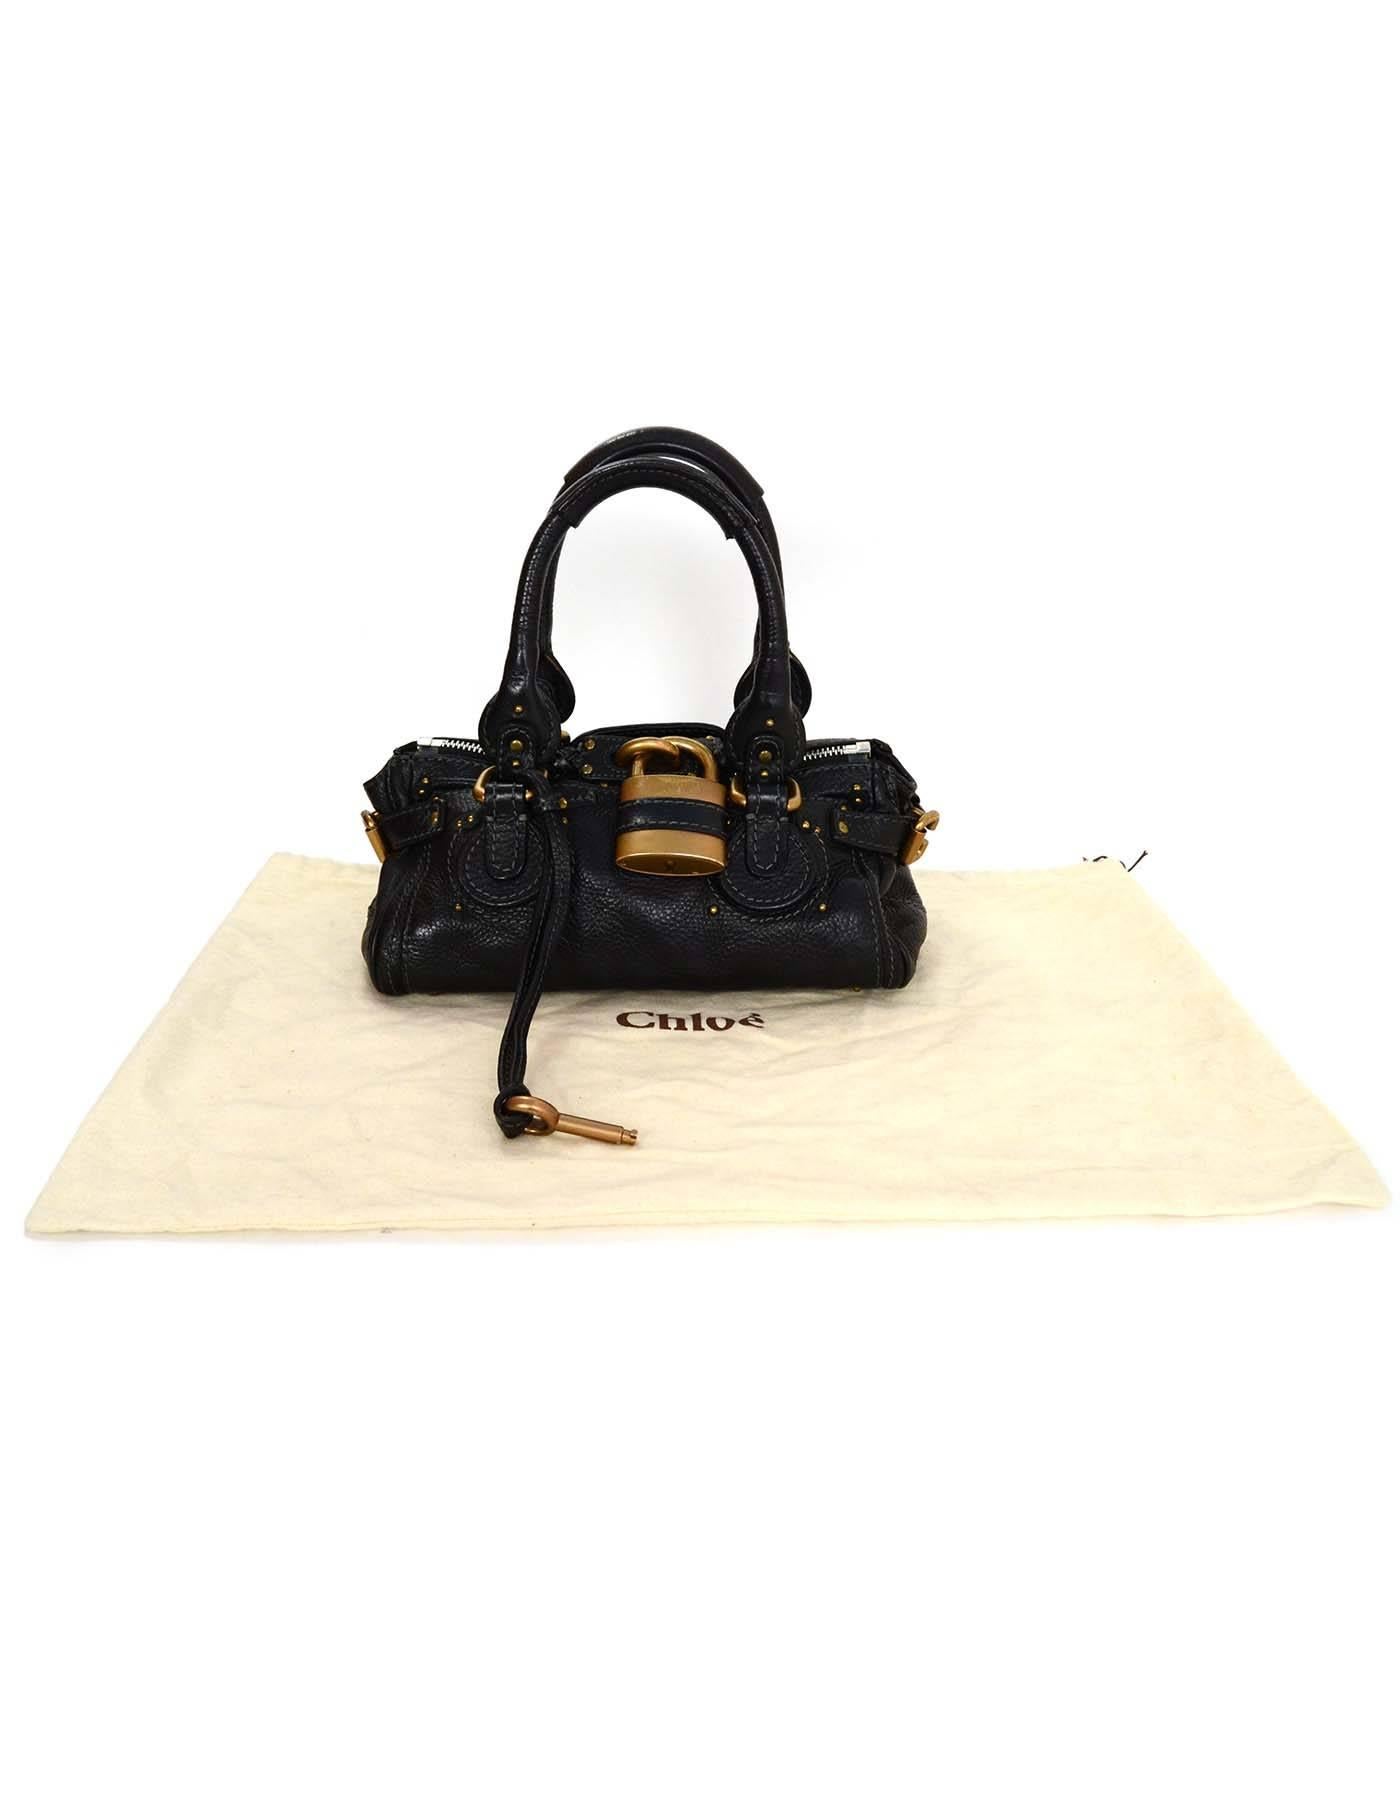 Chloe Black Leather Mini Paddington Bag GHW 2